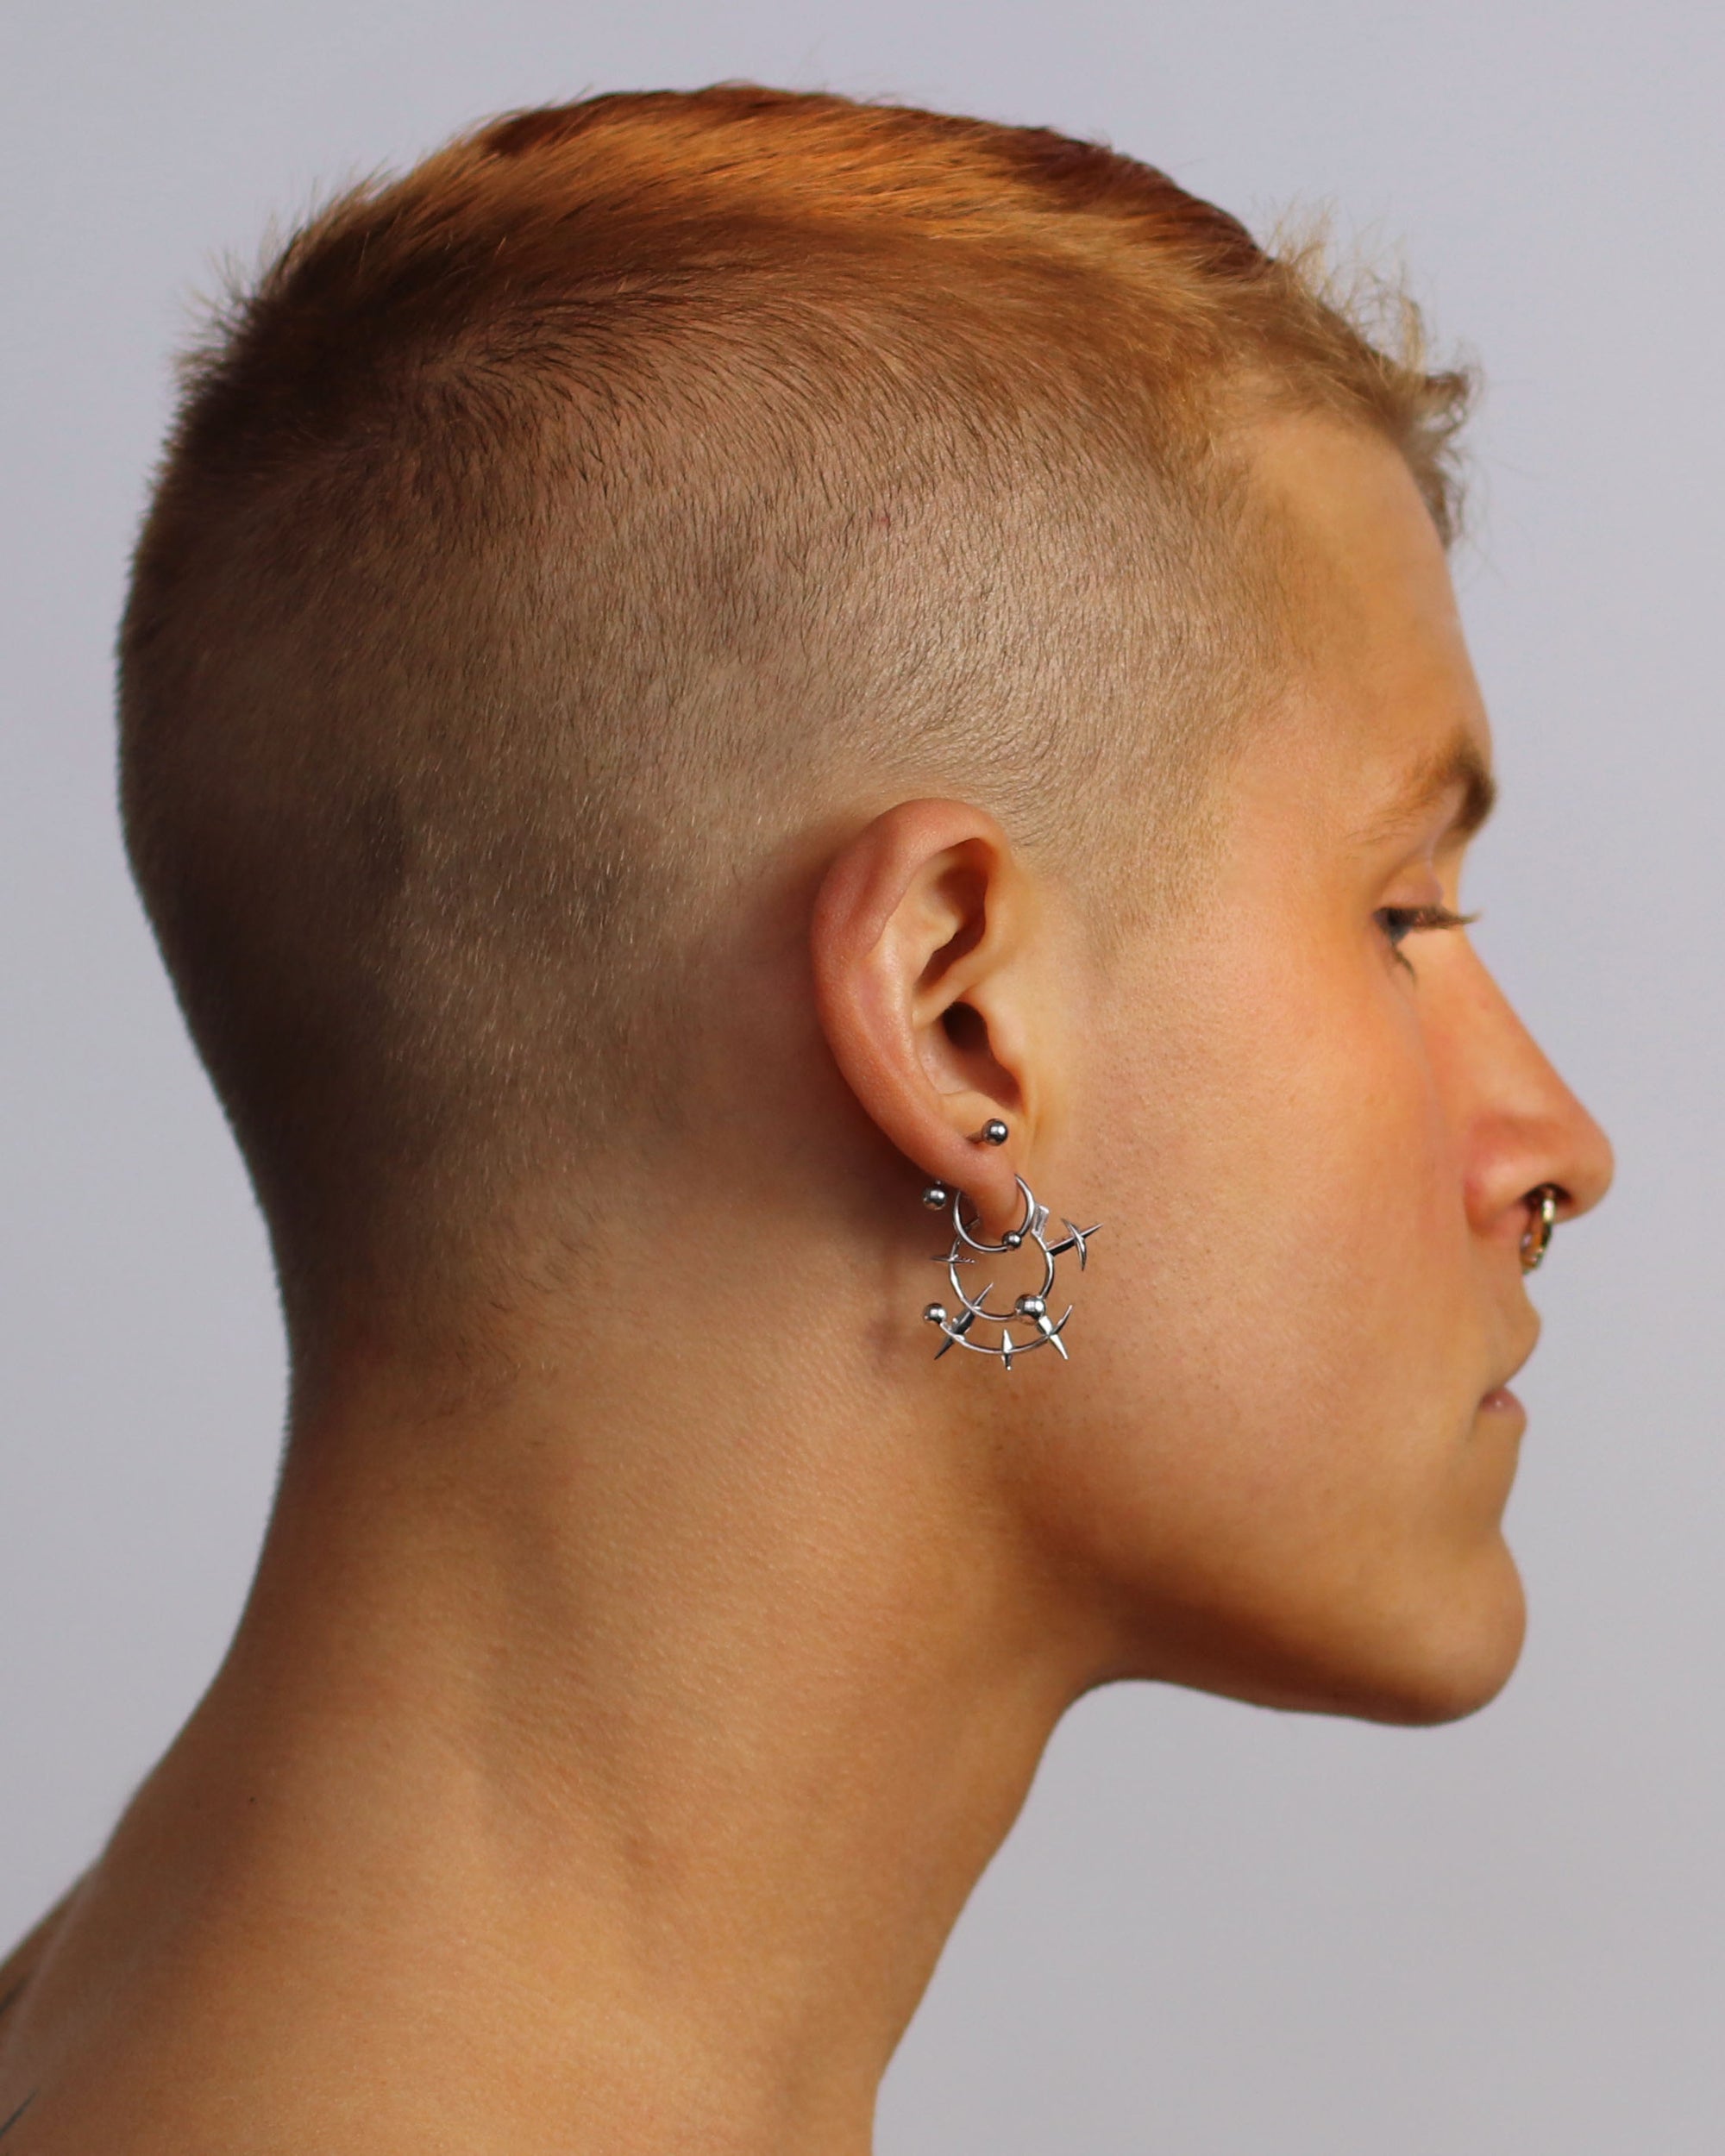 Ear Cuff Clip-on Male Earring Clip - 1 Pair – Code Earrings For Man